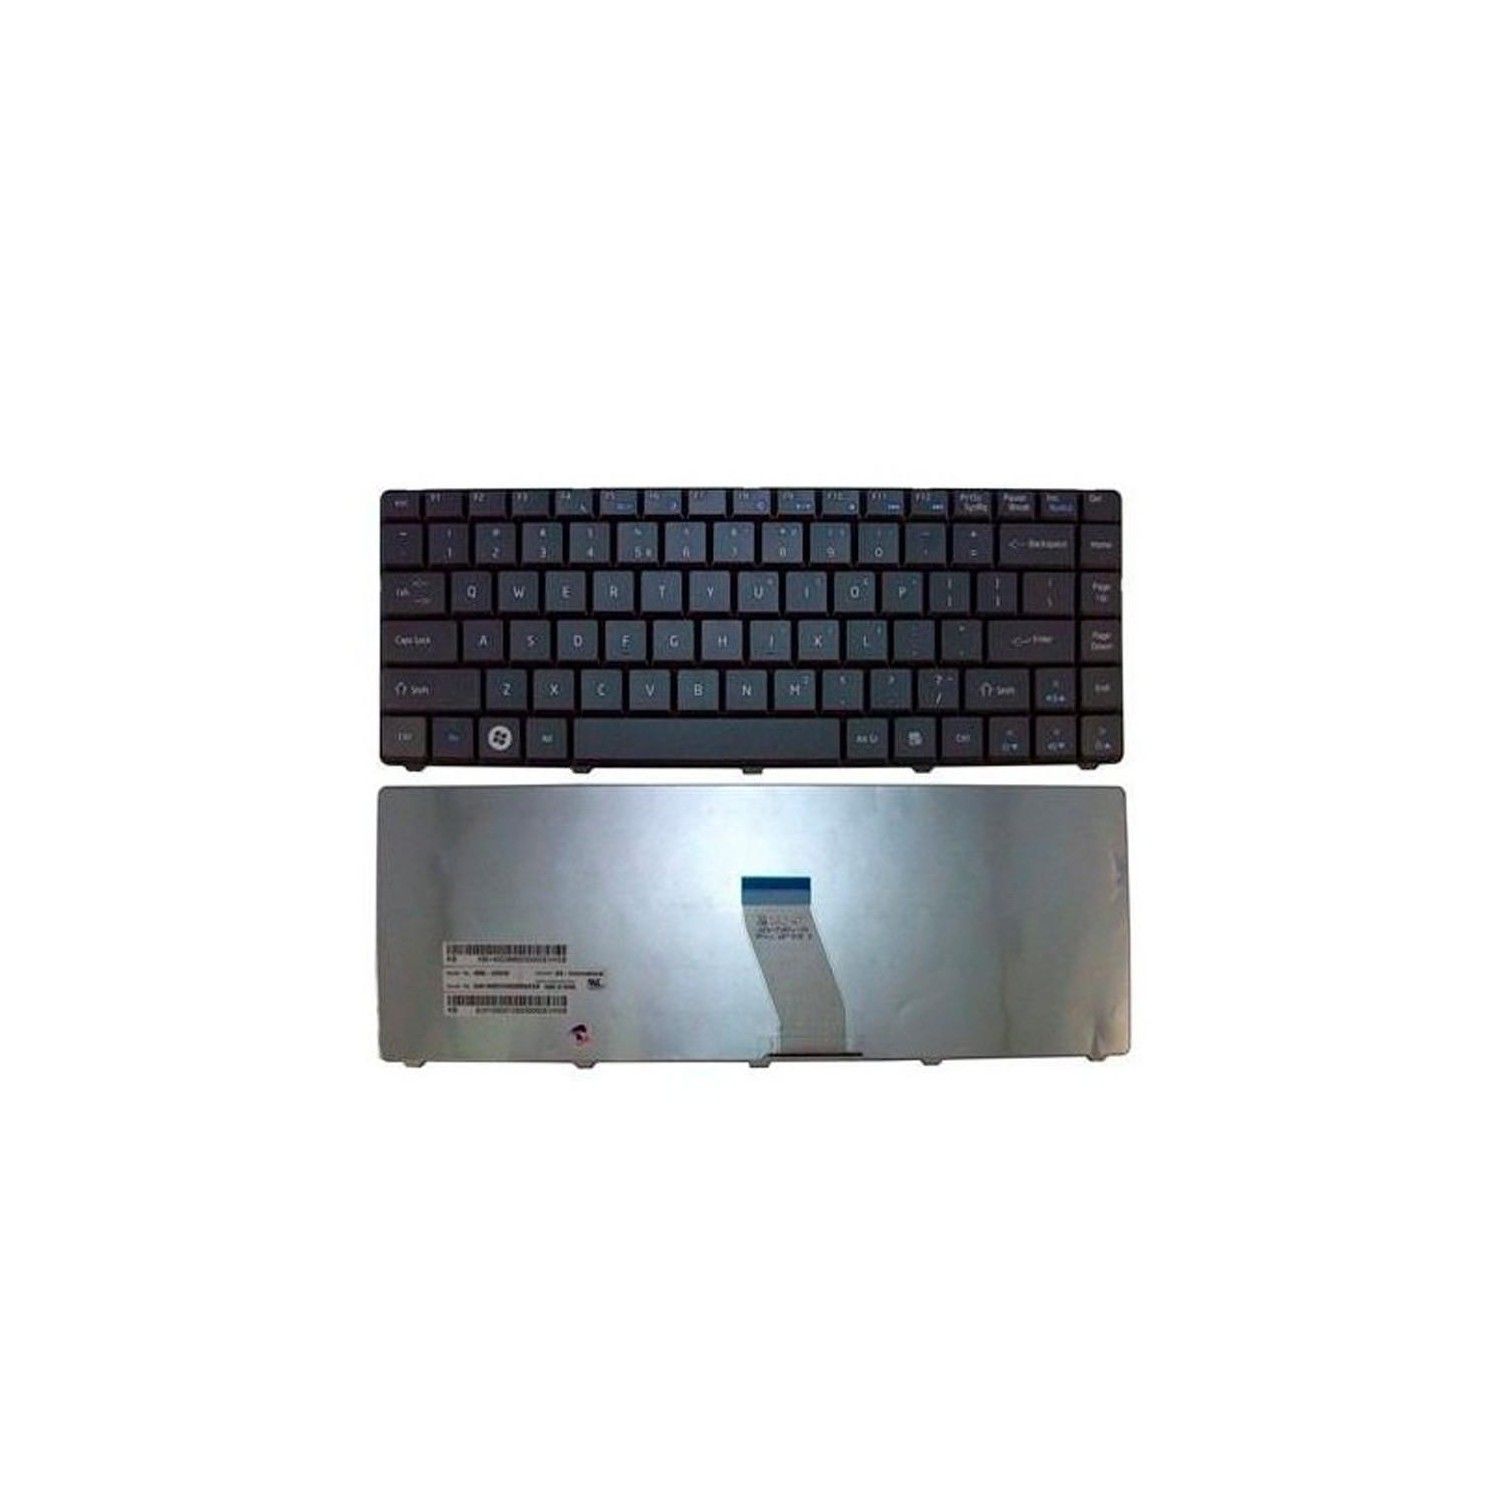 SP Laptop Keyboard For ACER ASPIRE 4732Z 4332 EMACHINES D525 D725